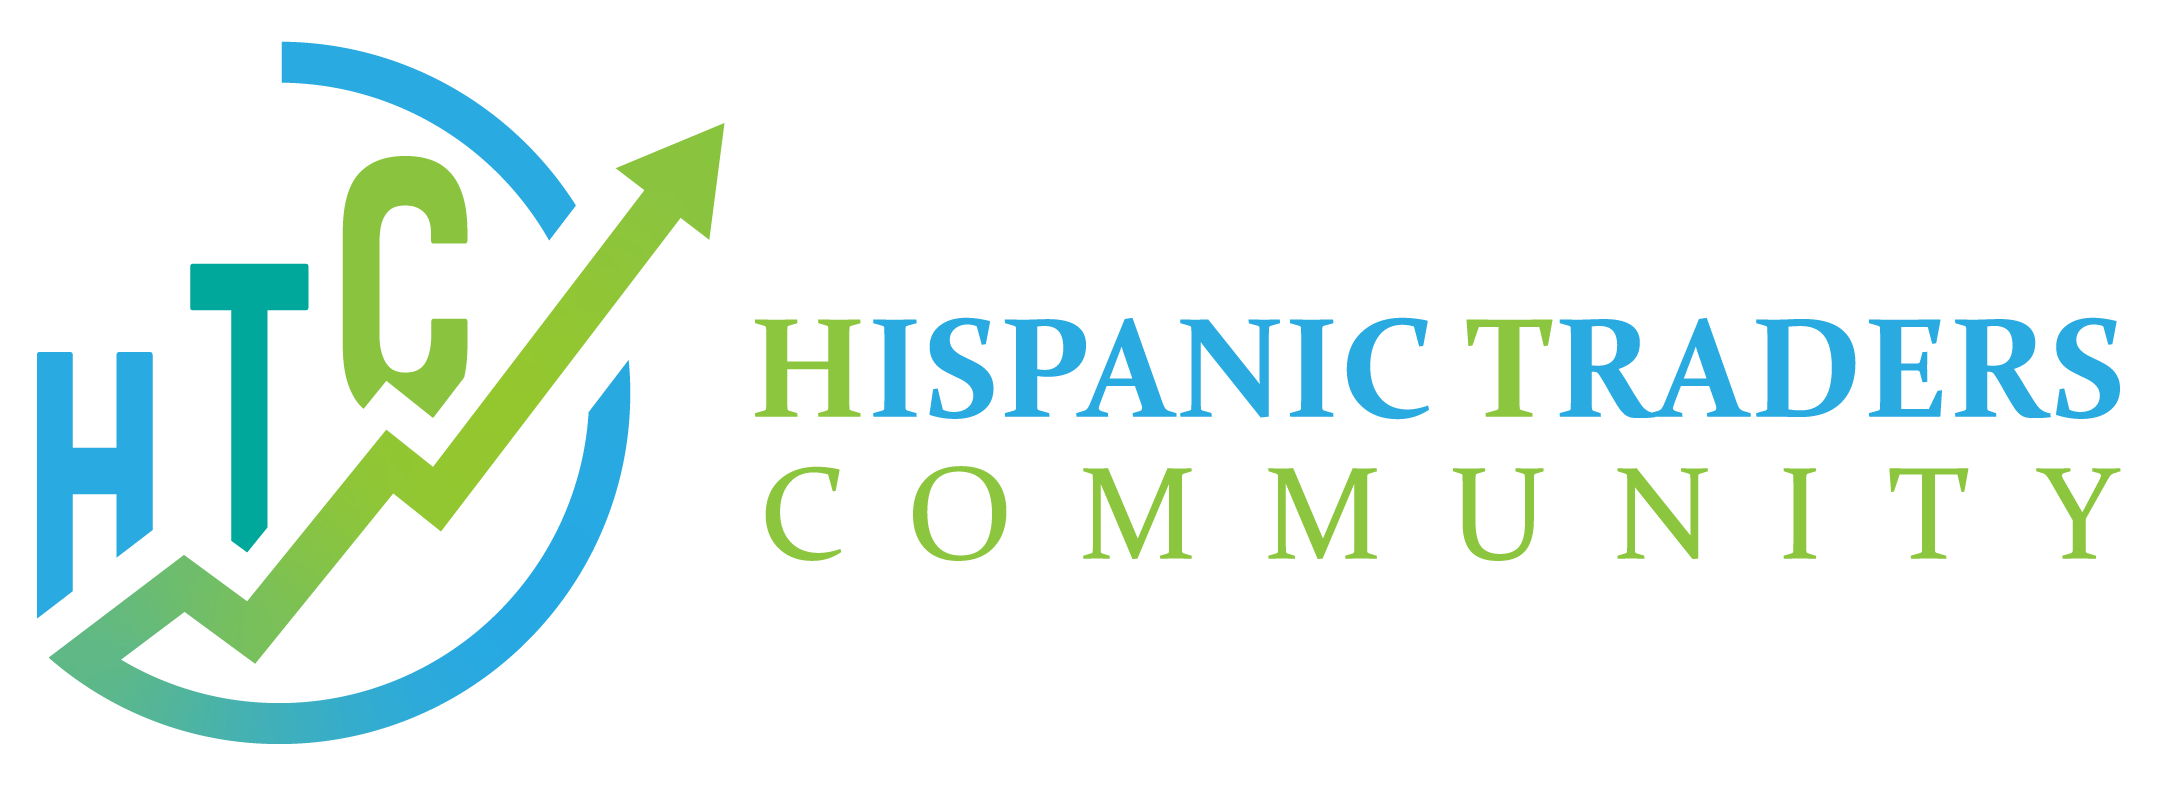 Hispanic Traders Community